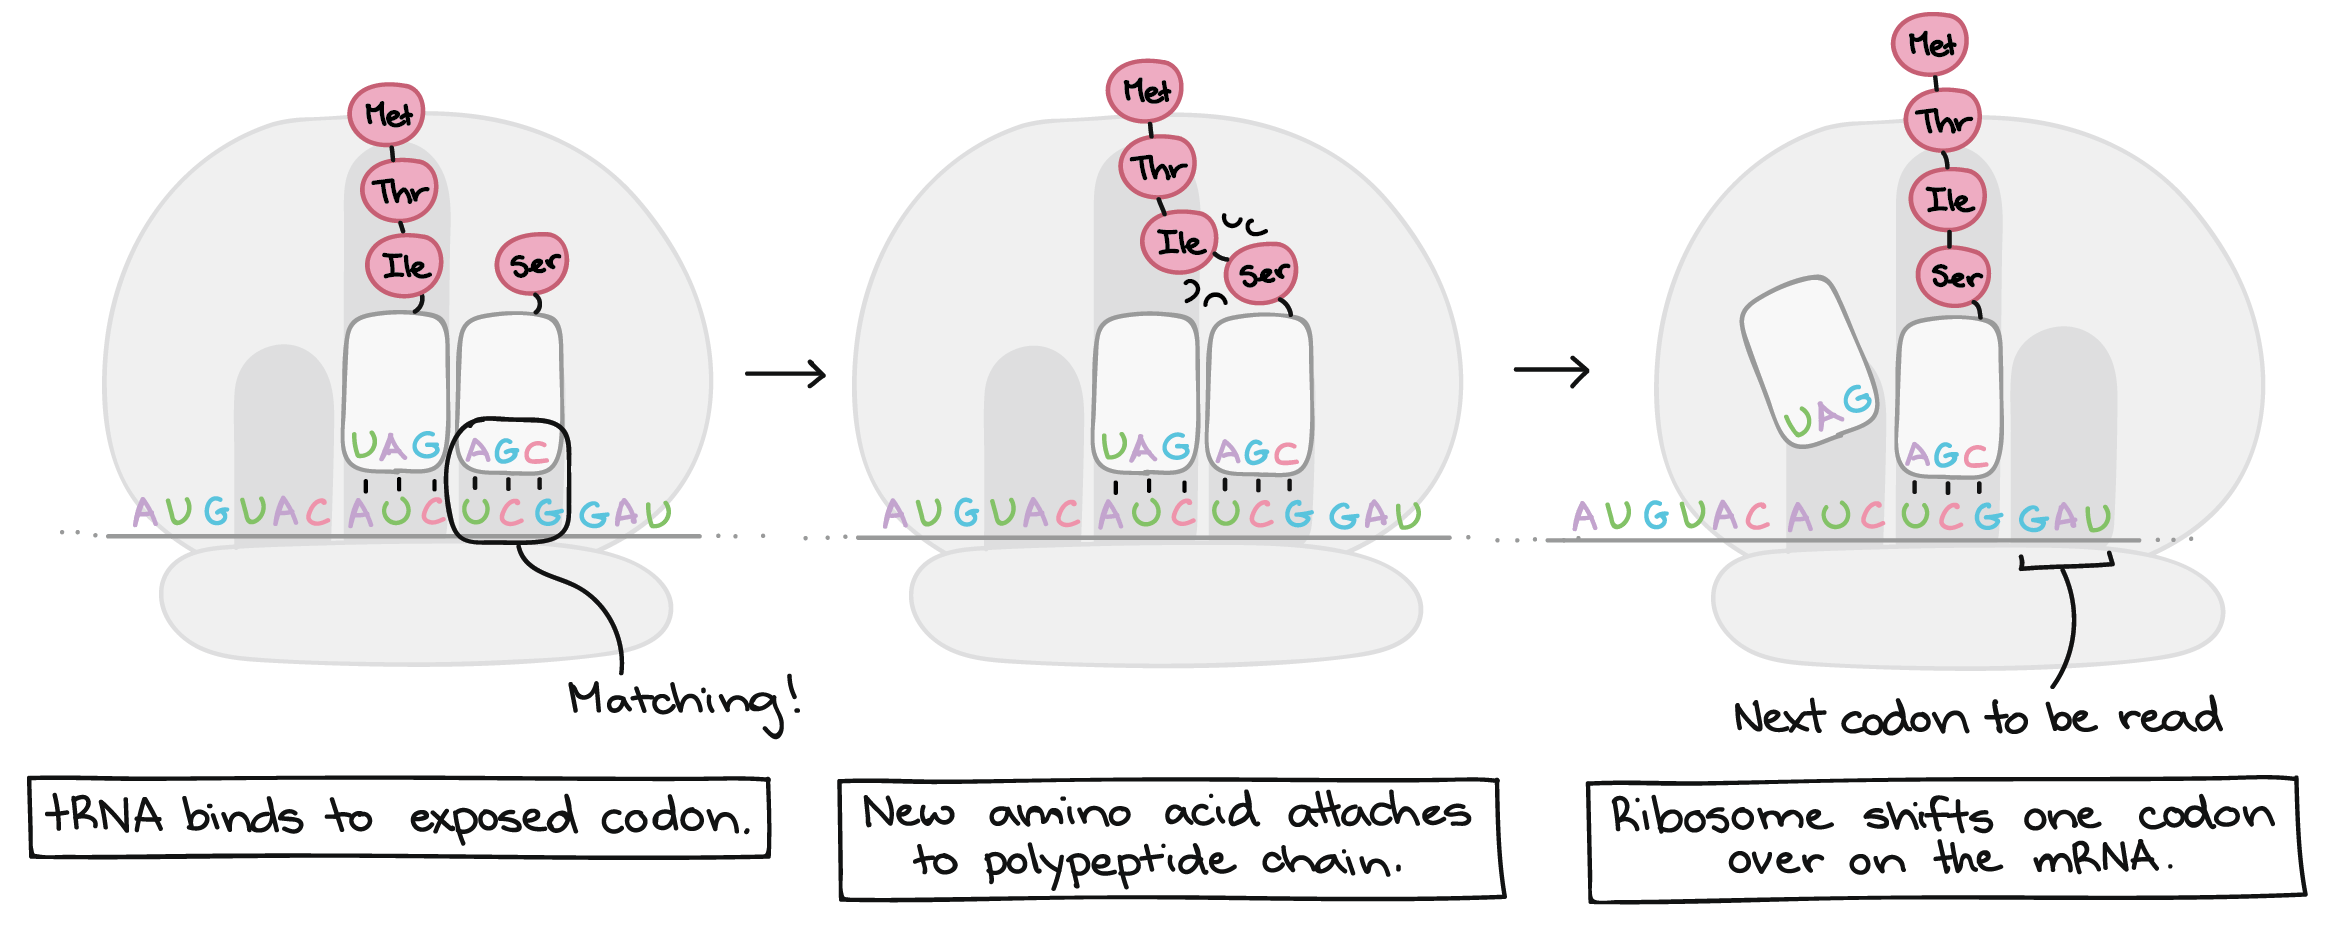 Ribosome and amino acid generation